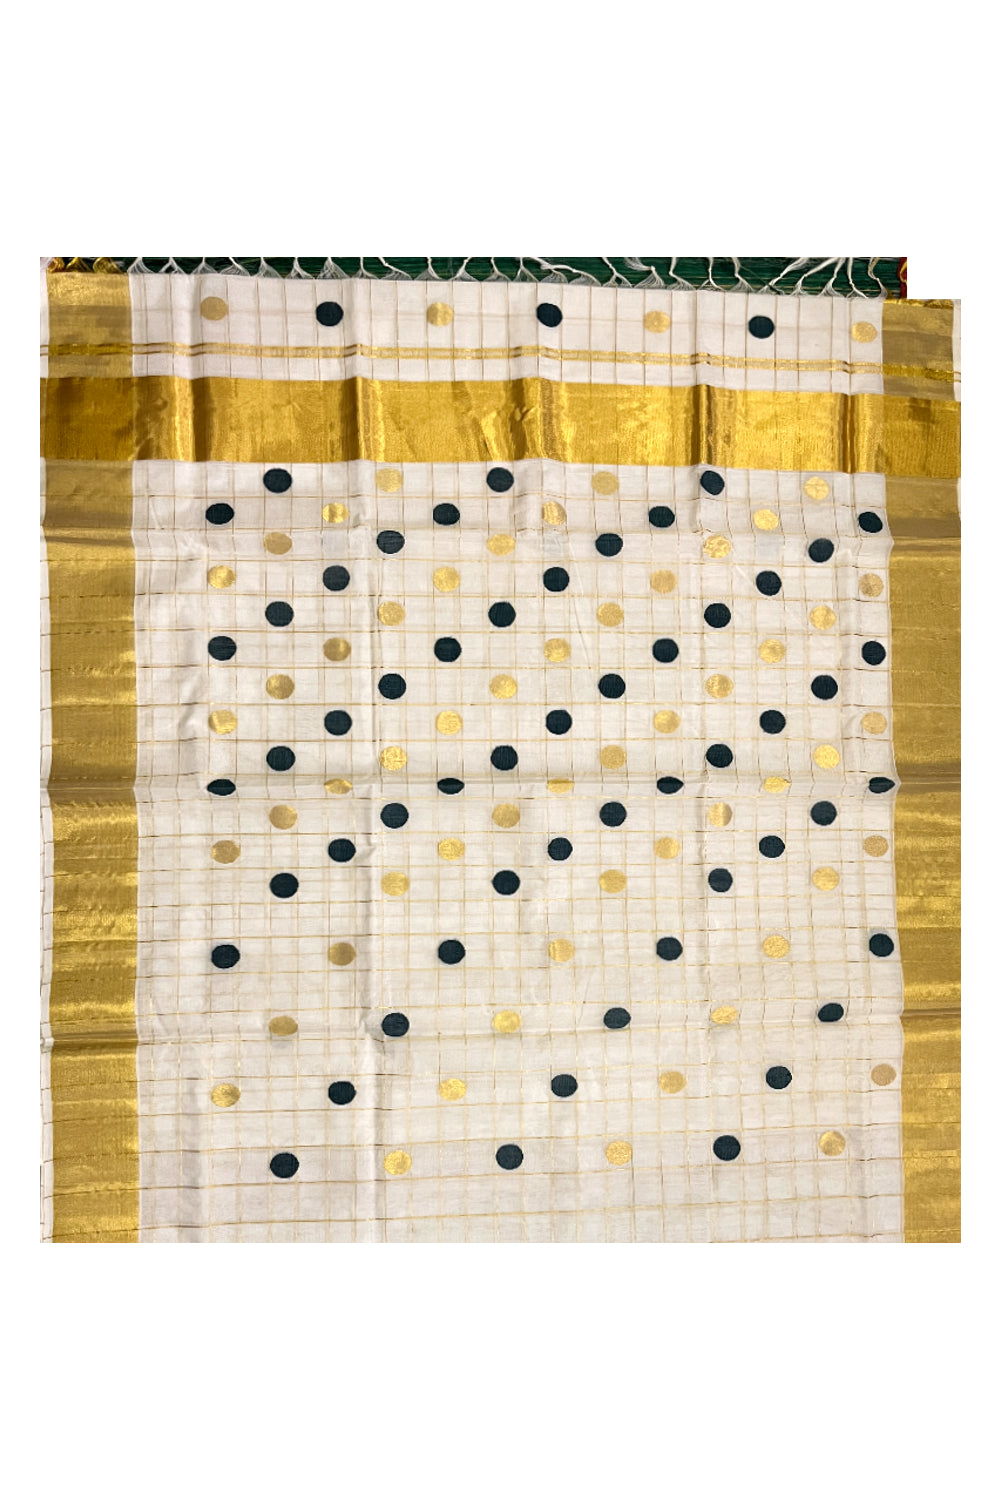 Southloom Premium Handloom Cotton Check Design Saree with Golden and Green Polka Work Across Body